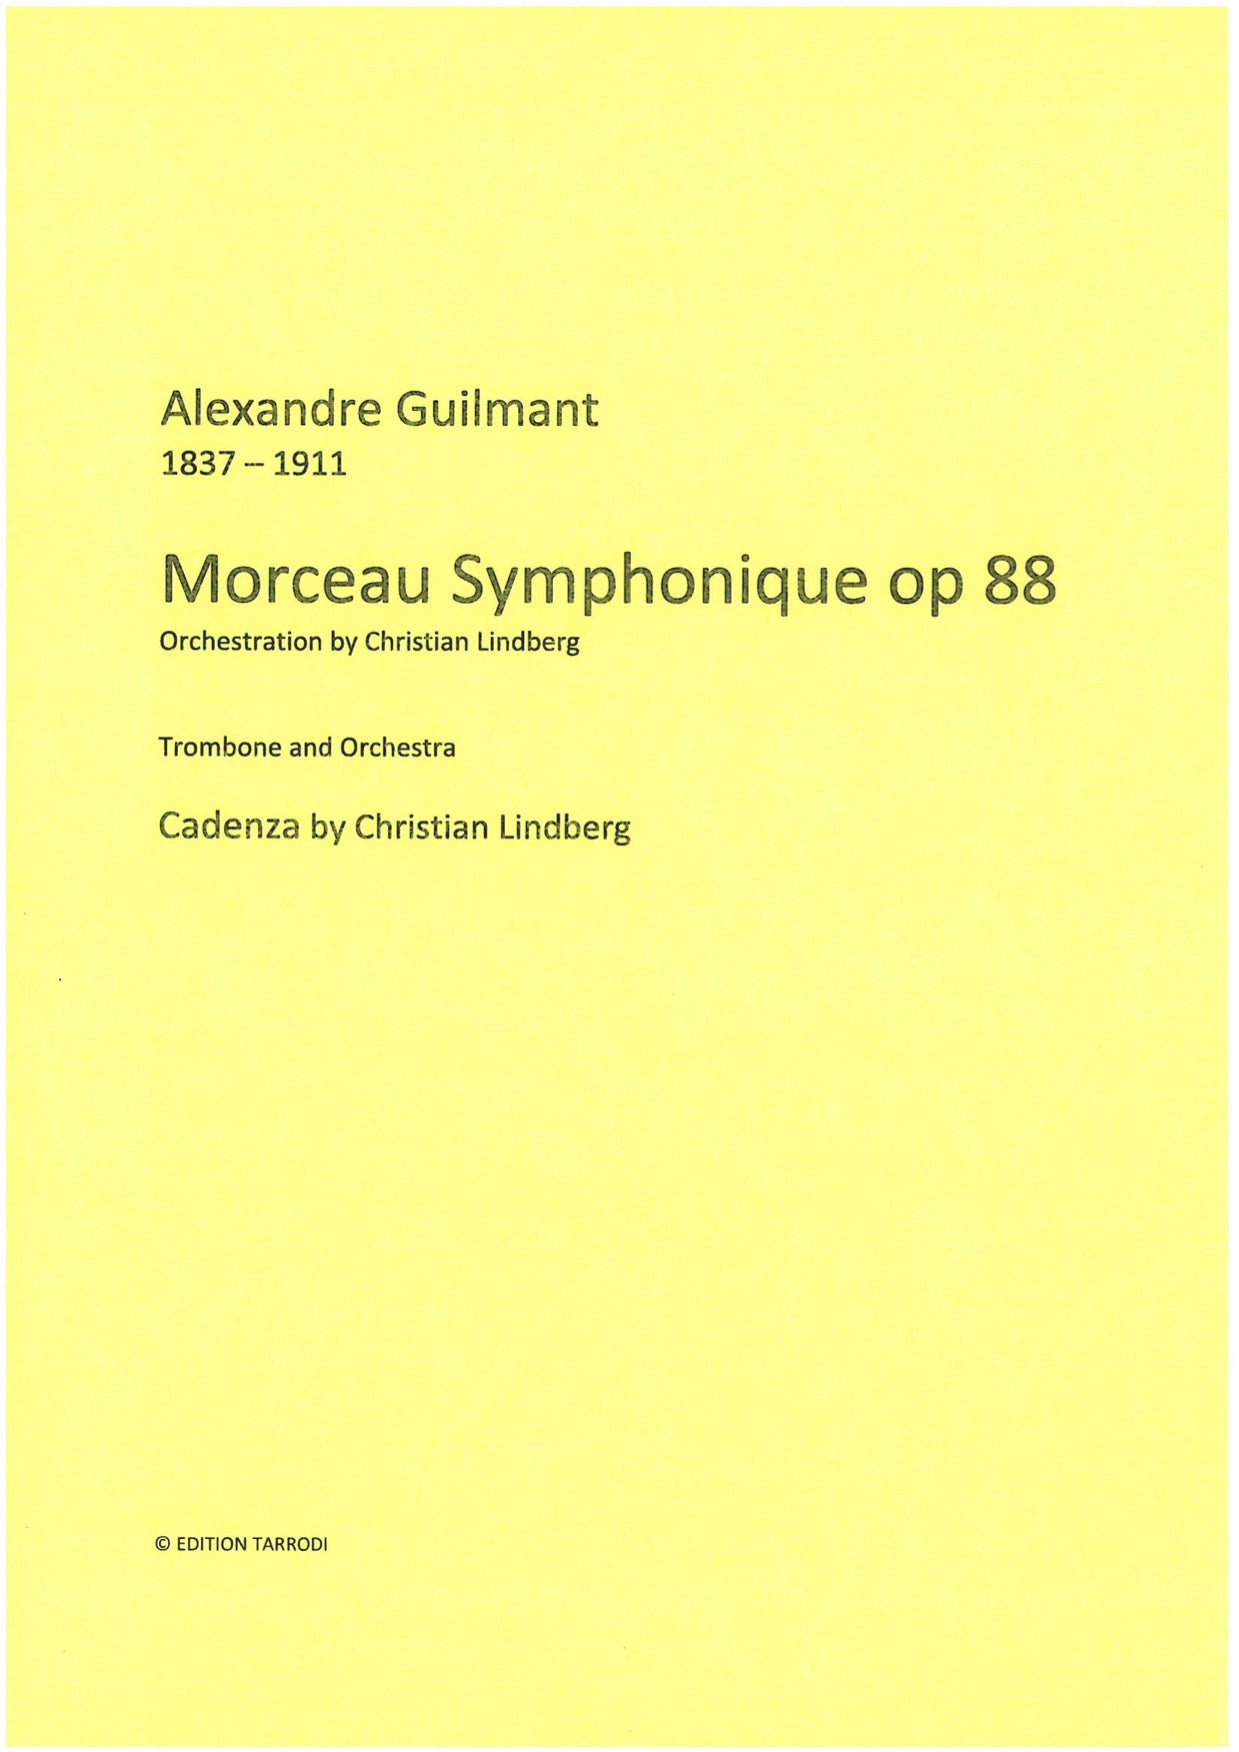 Christian Lindberg - Cadenza Alexandre Guilmant